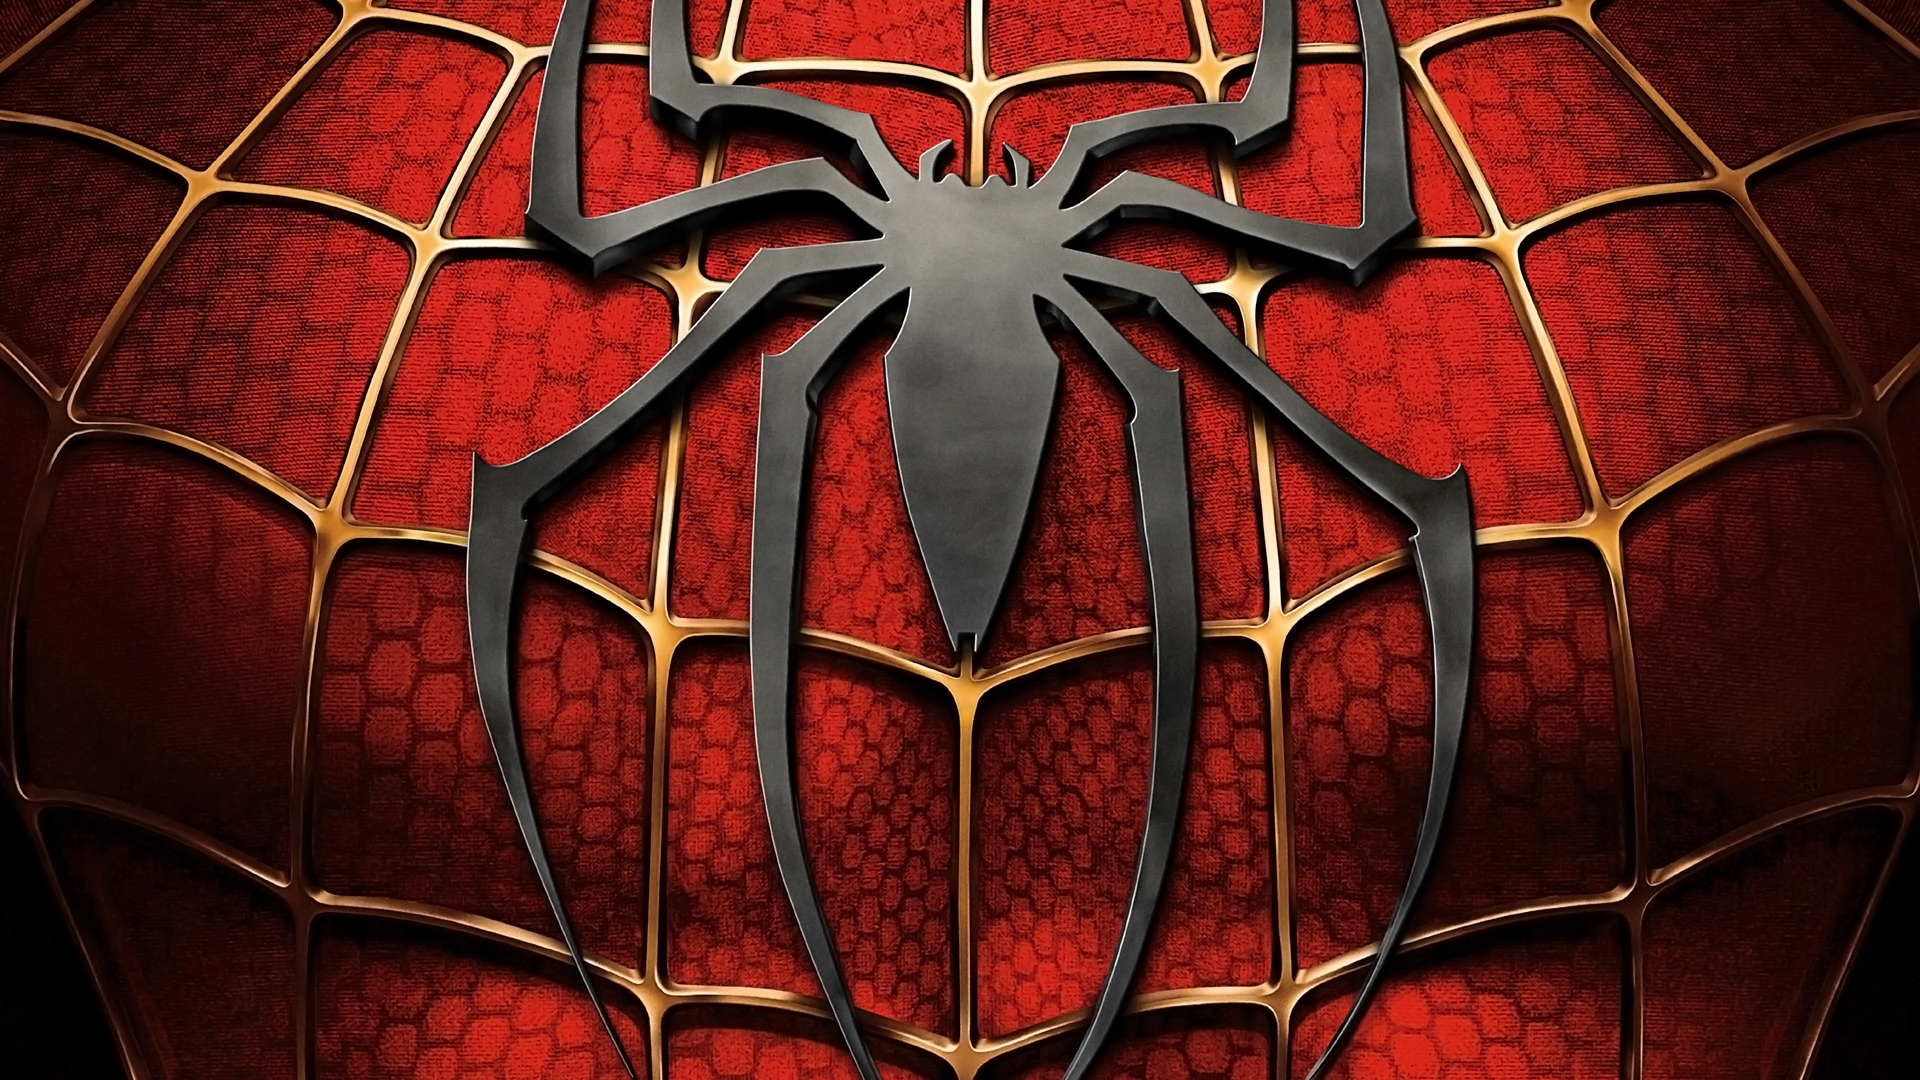 spiderman marvel wallpaper images 1920x1080